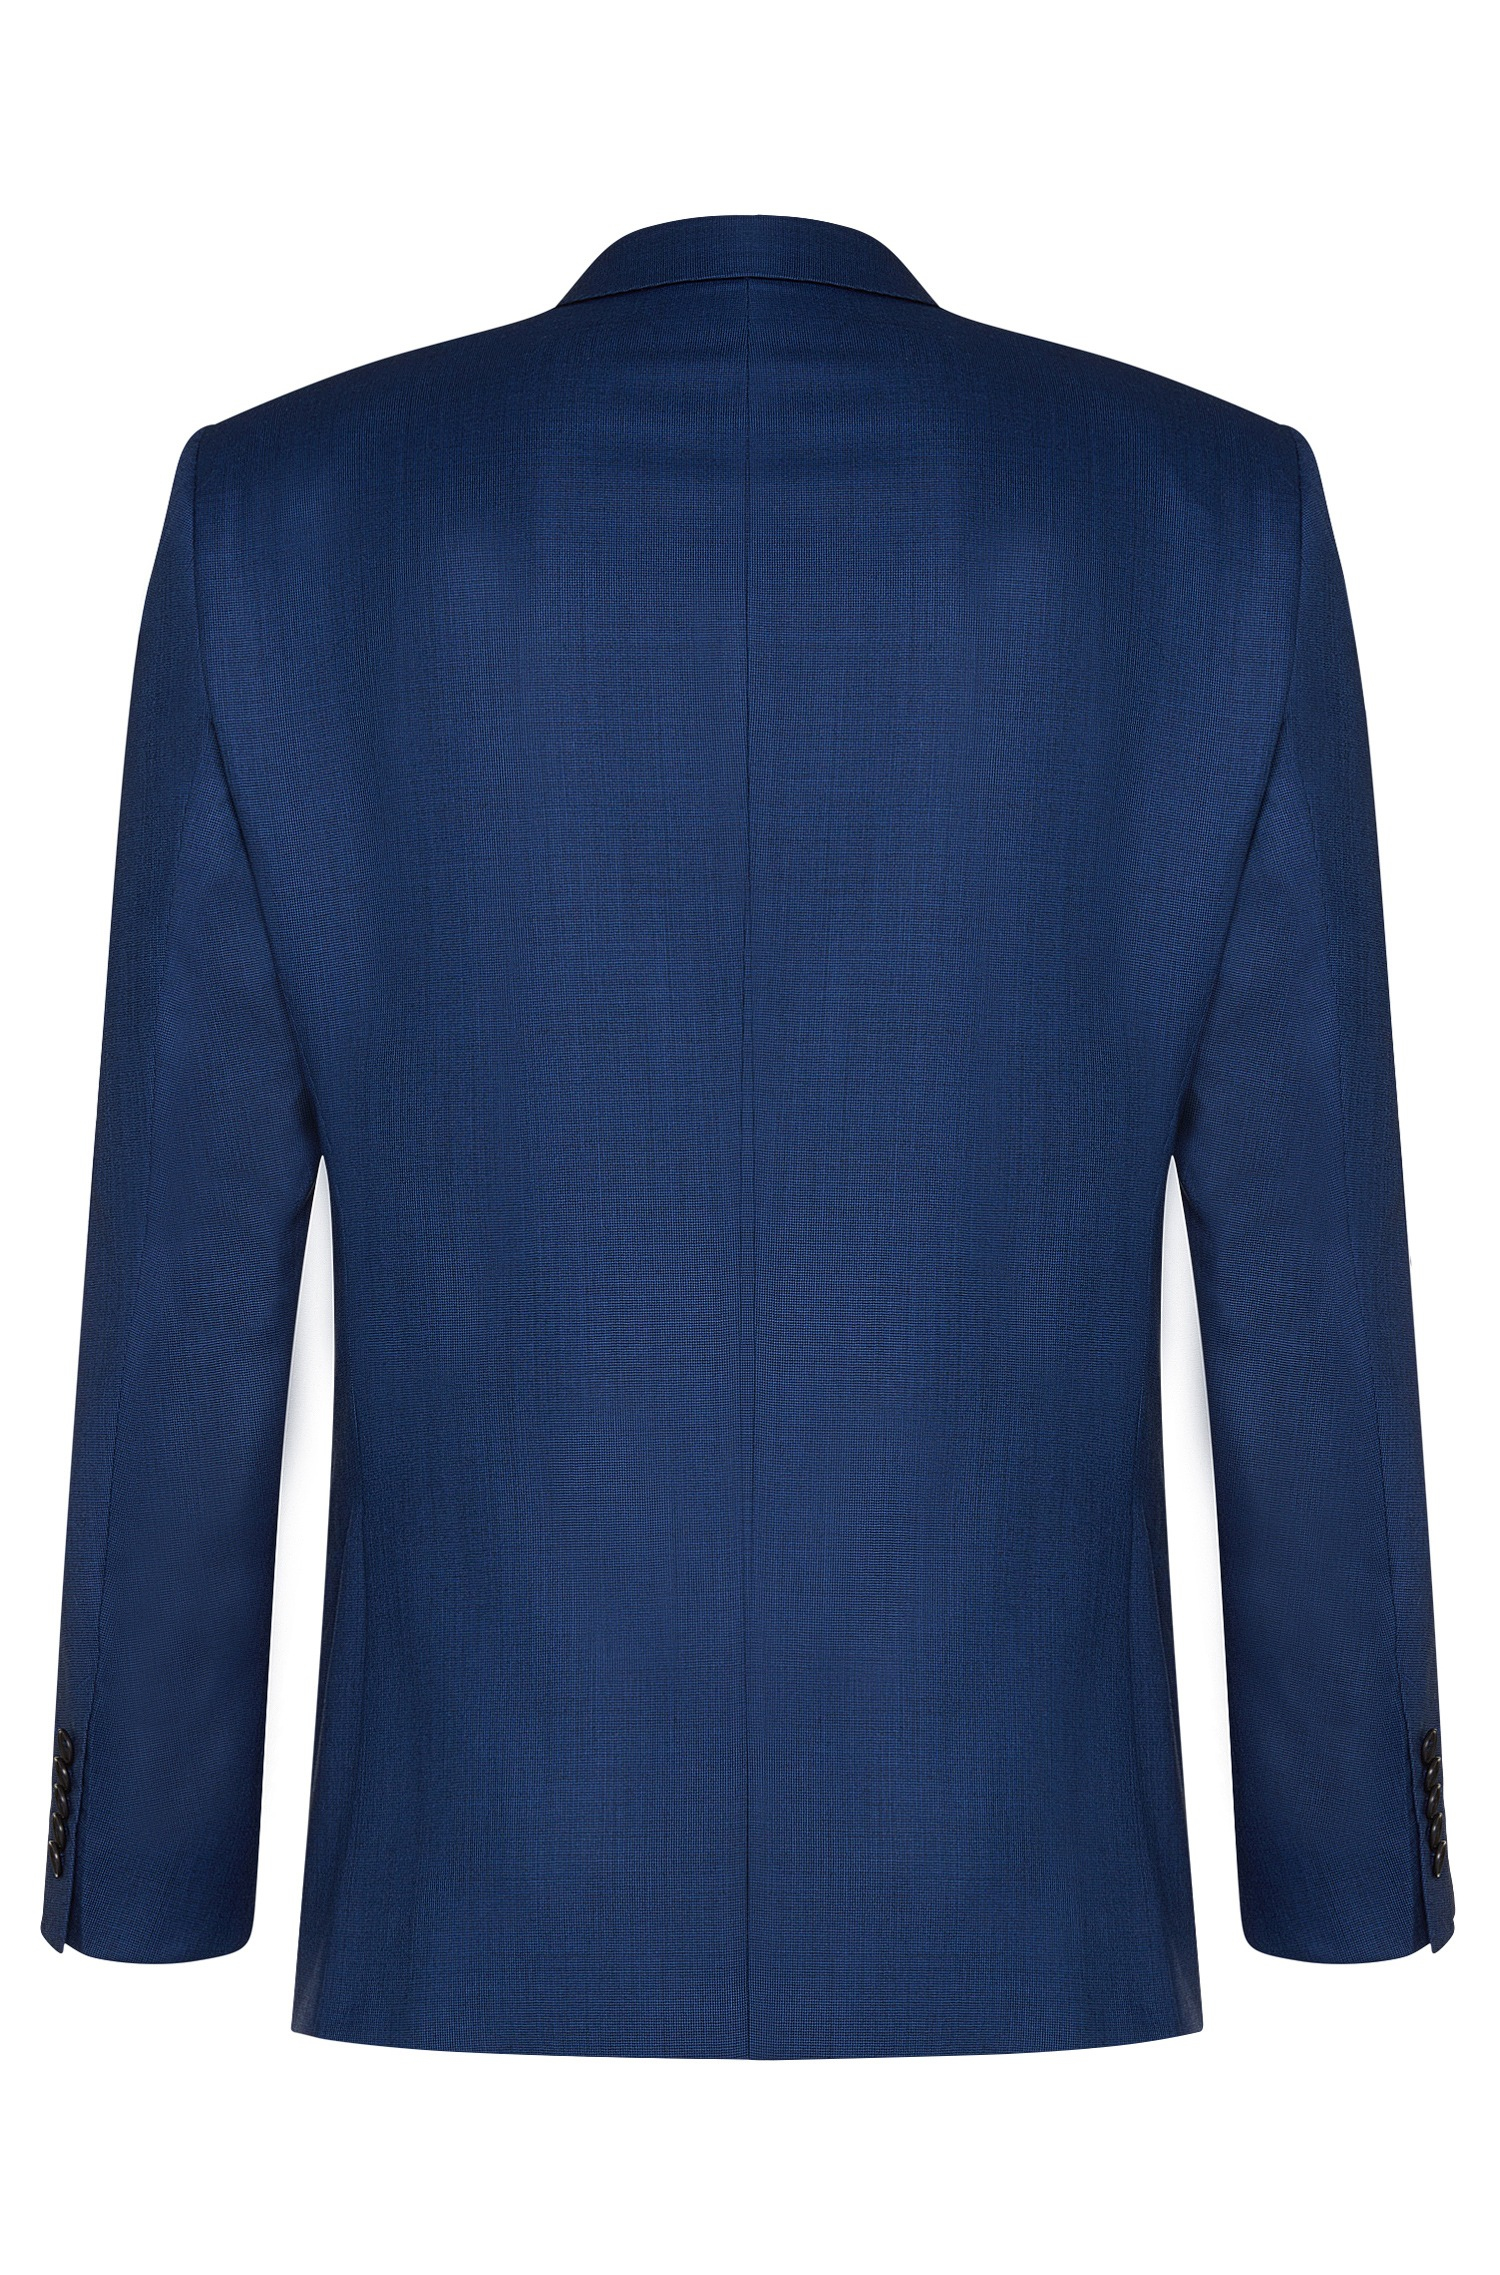 BOSS by HUGO BOSS 't-harvers/glover' | Slim Fit, Super 150 Italian Virgin  Wool Suit in Blue for Men | Lyst